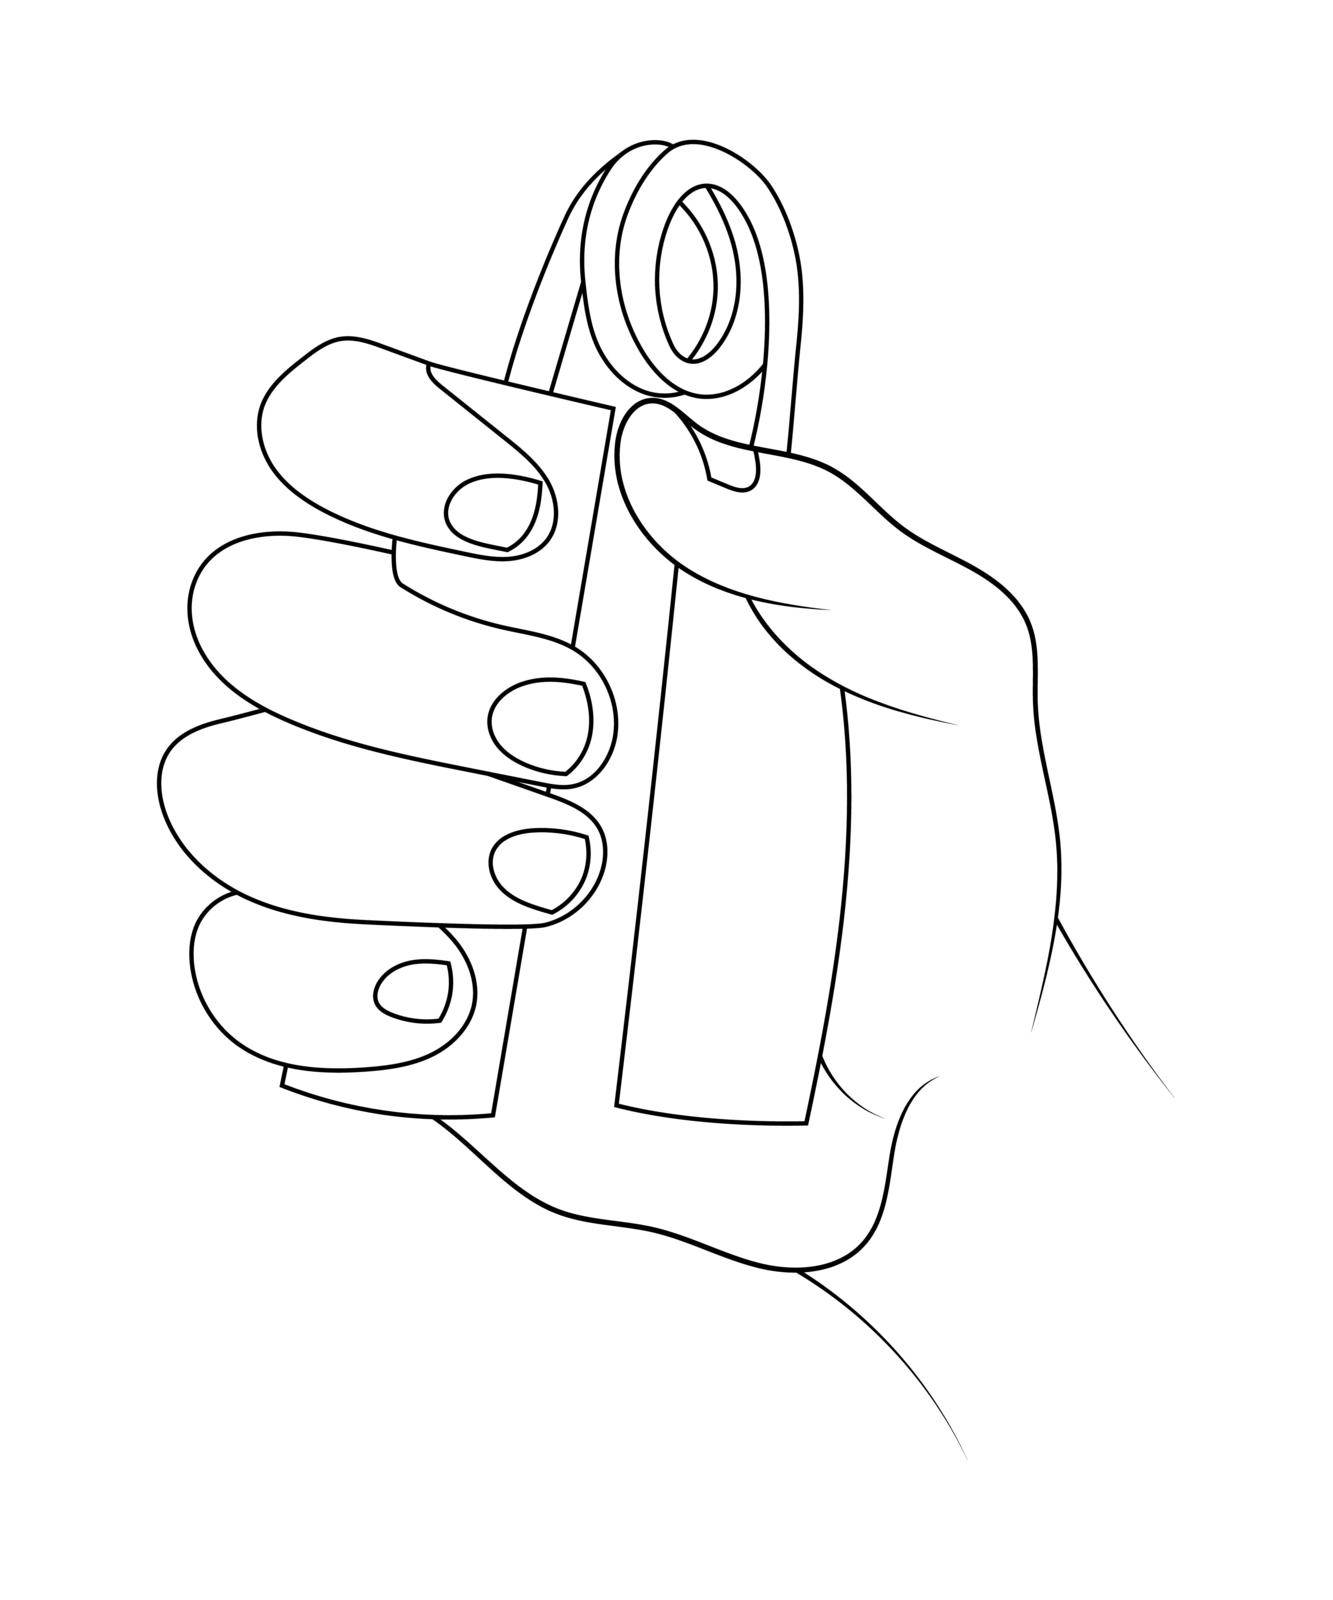 Hand grip arm muscle trainer sketch illustration. by vas_evg